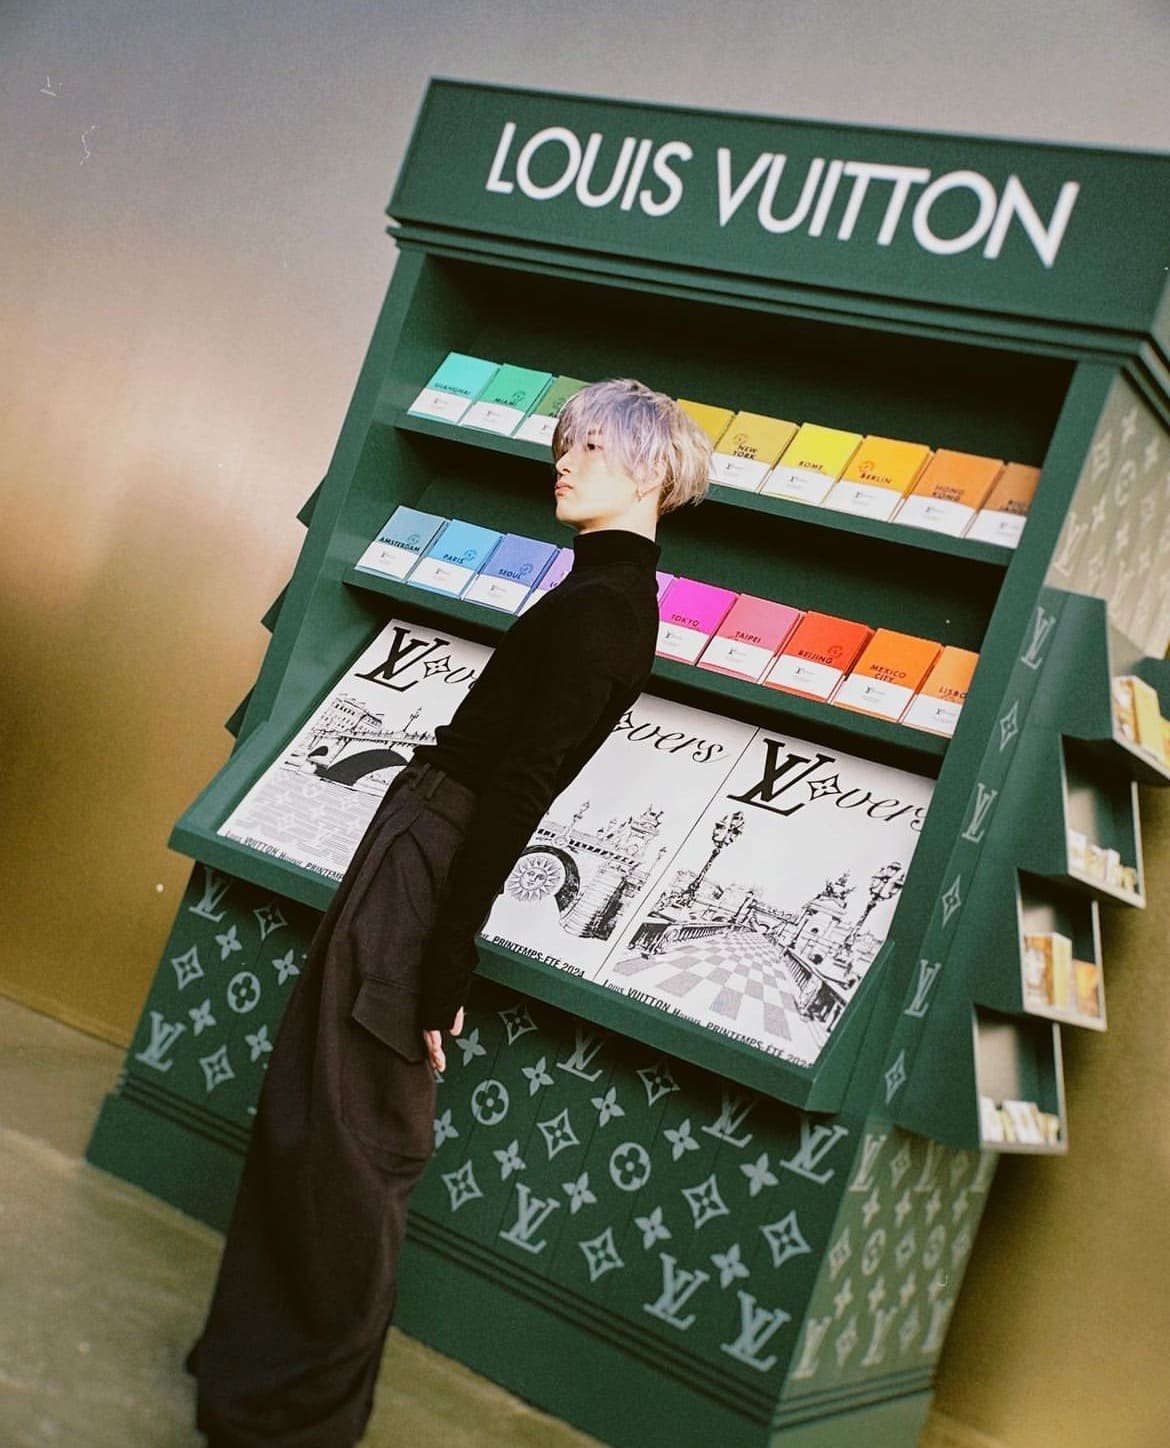 Jackson Wang is Louis Vuitton's newest house ambassador